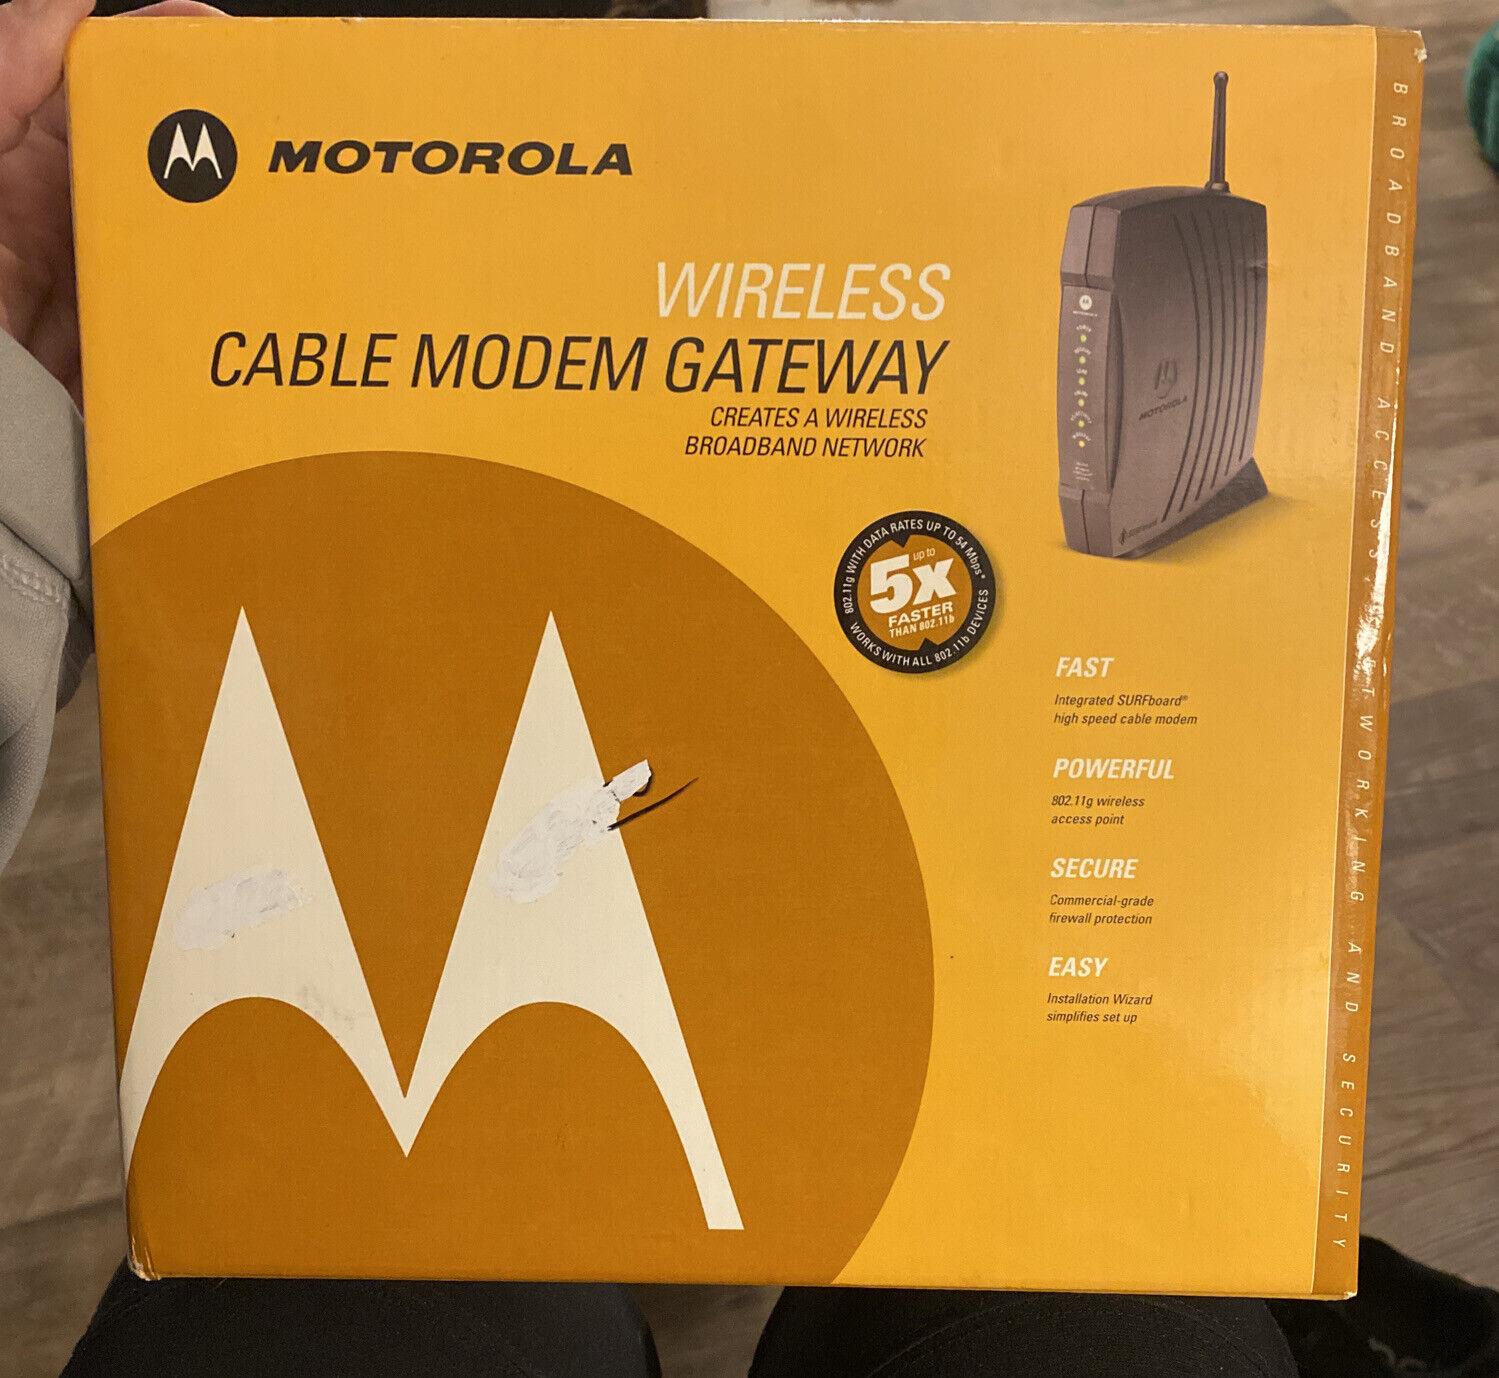 Motorola Cable Modem Gateway Wireless Broadband SBG900 Networking Device PC